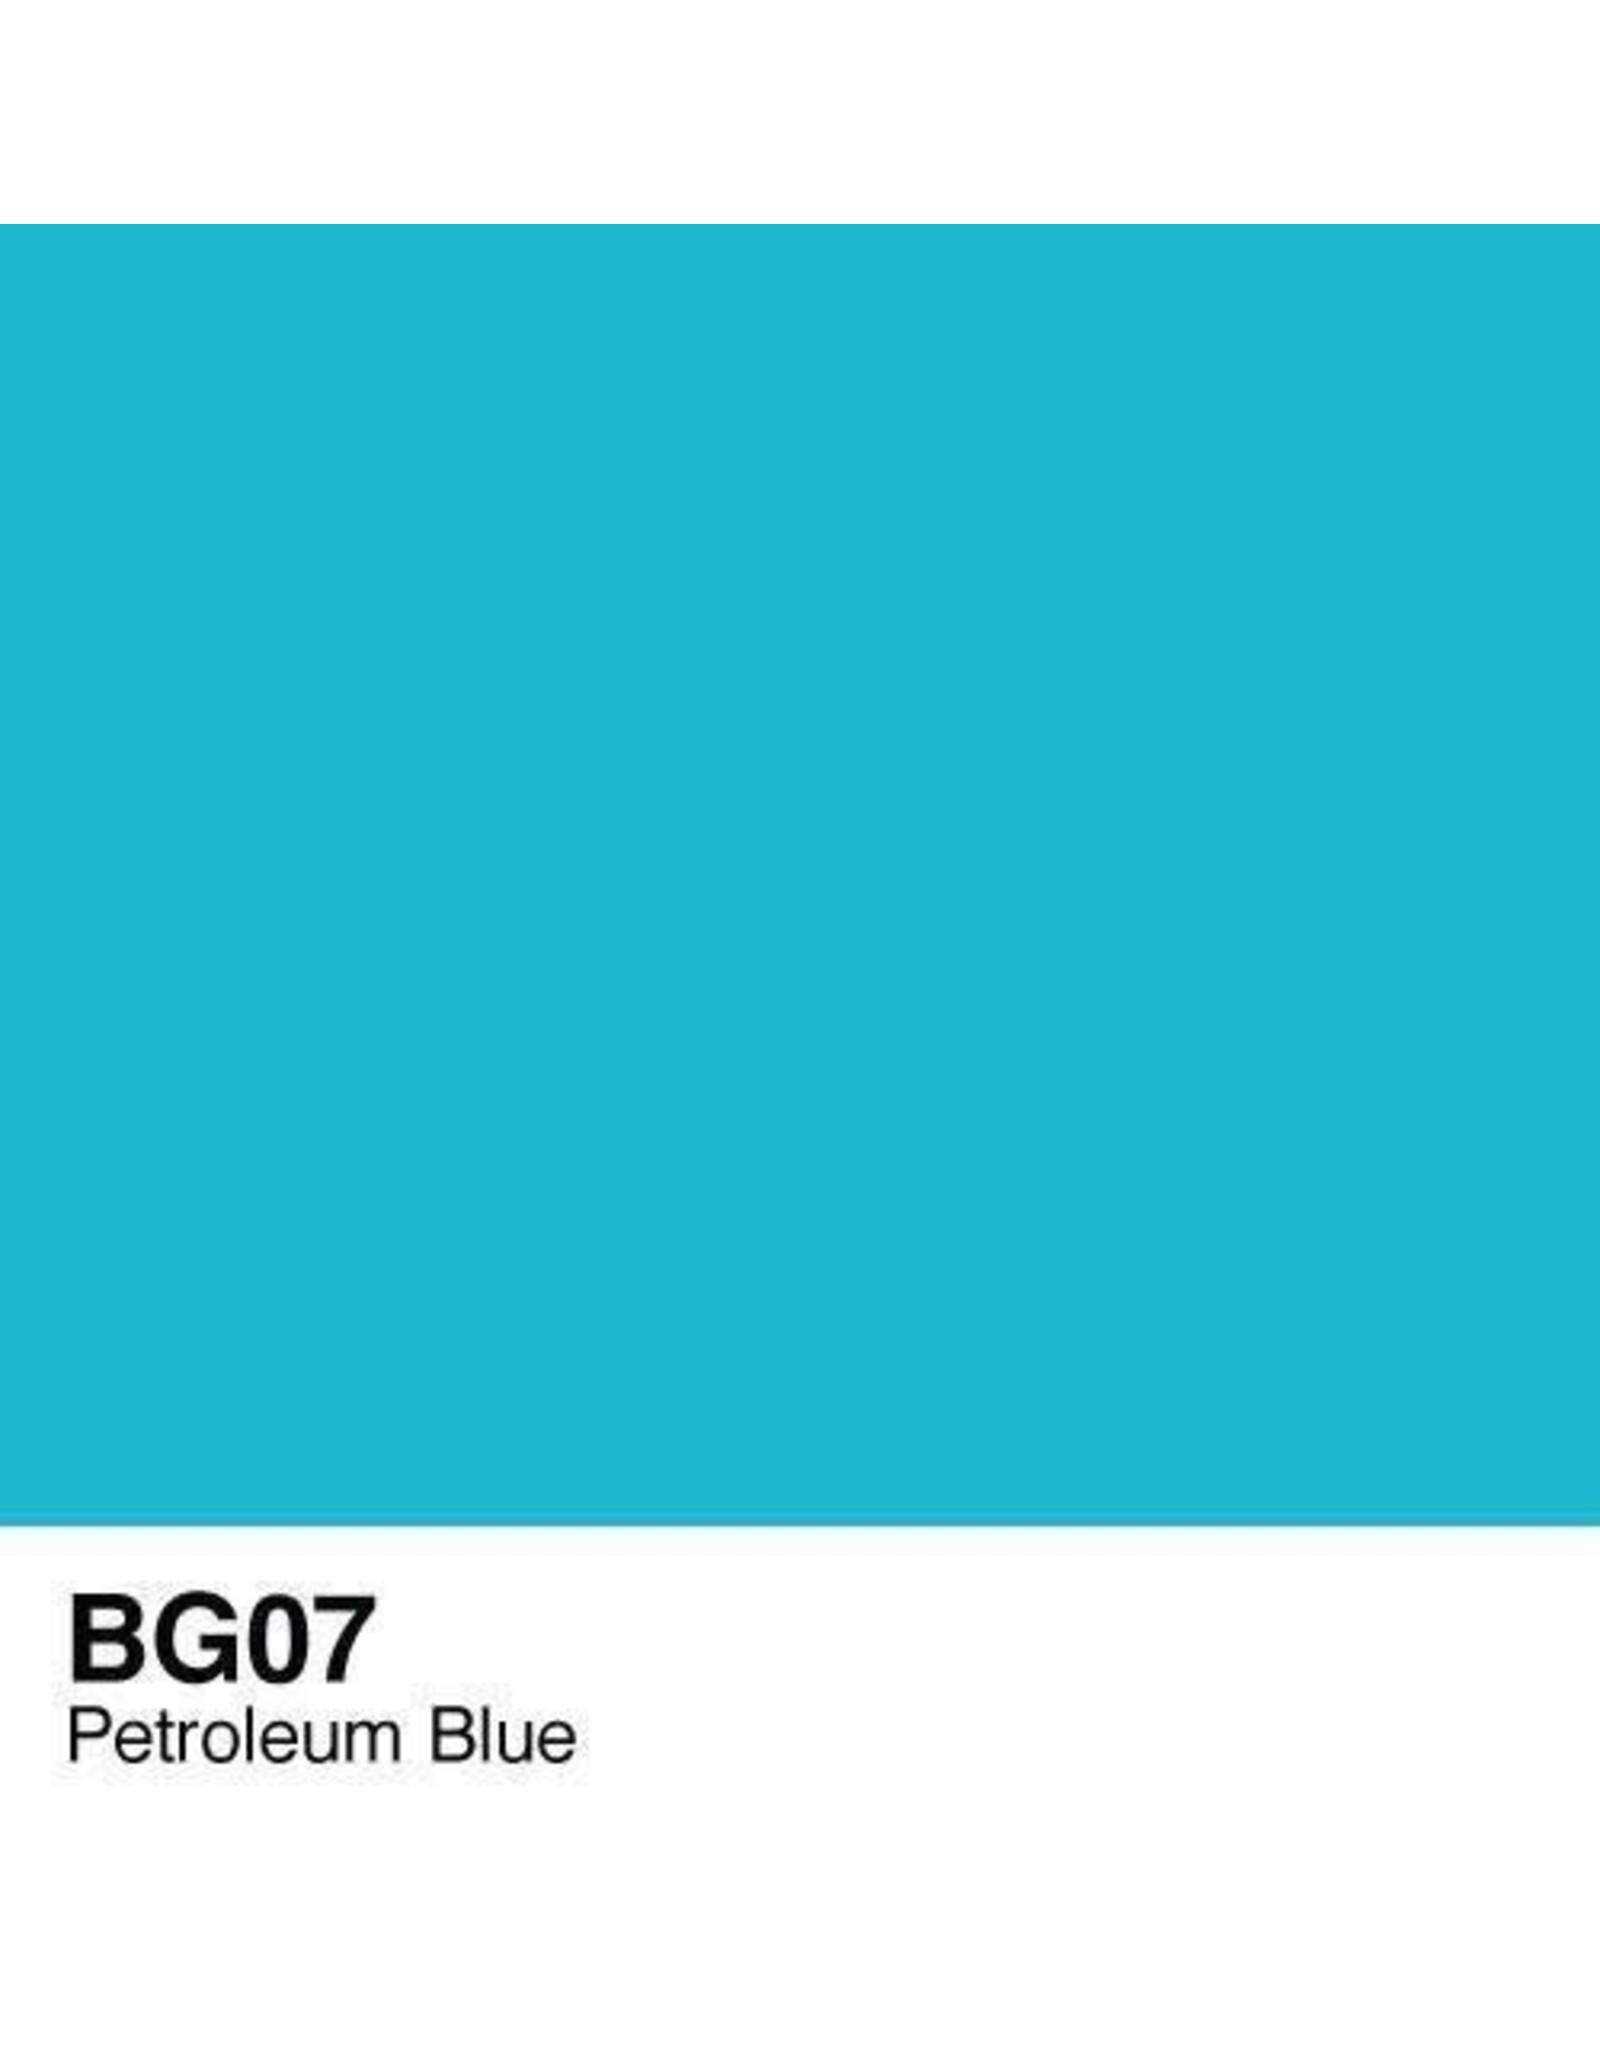 COPIC COPIC BG07 PETROLEUM BLUE SKETCH MARKER